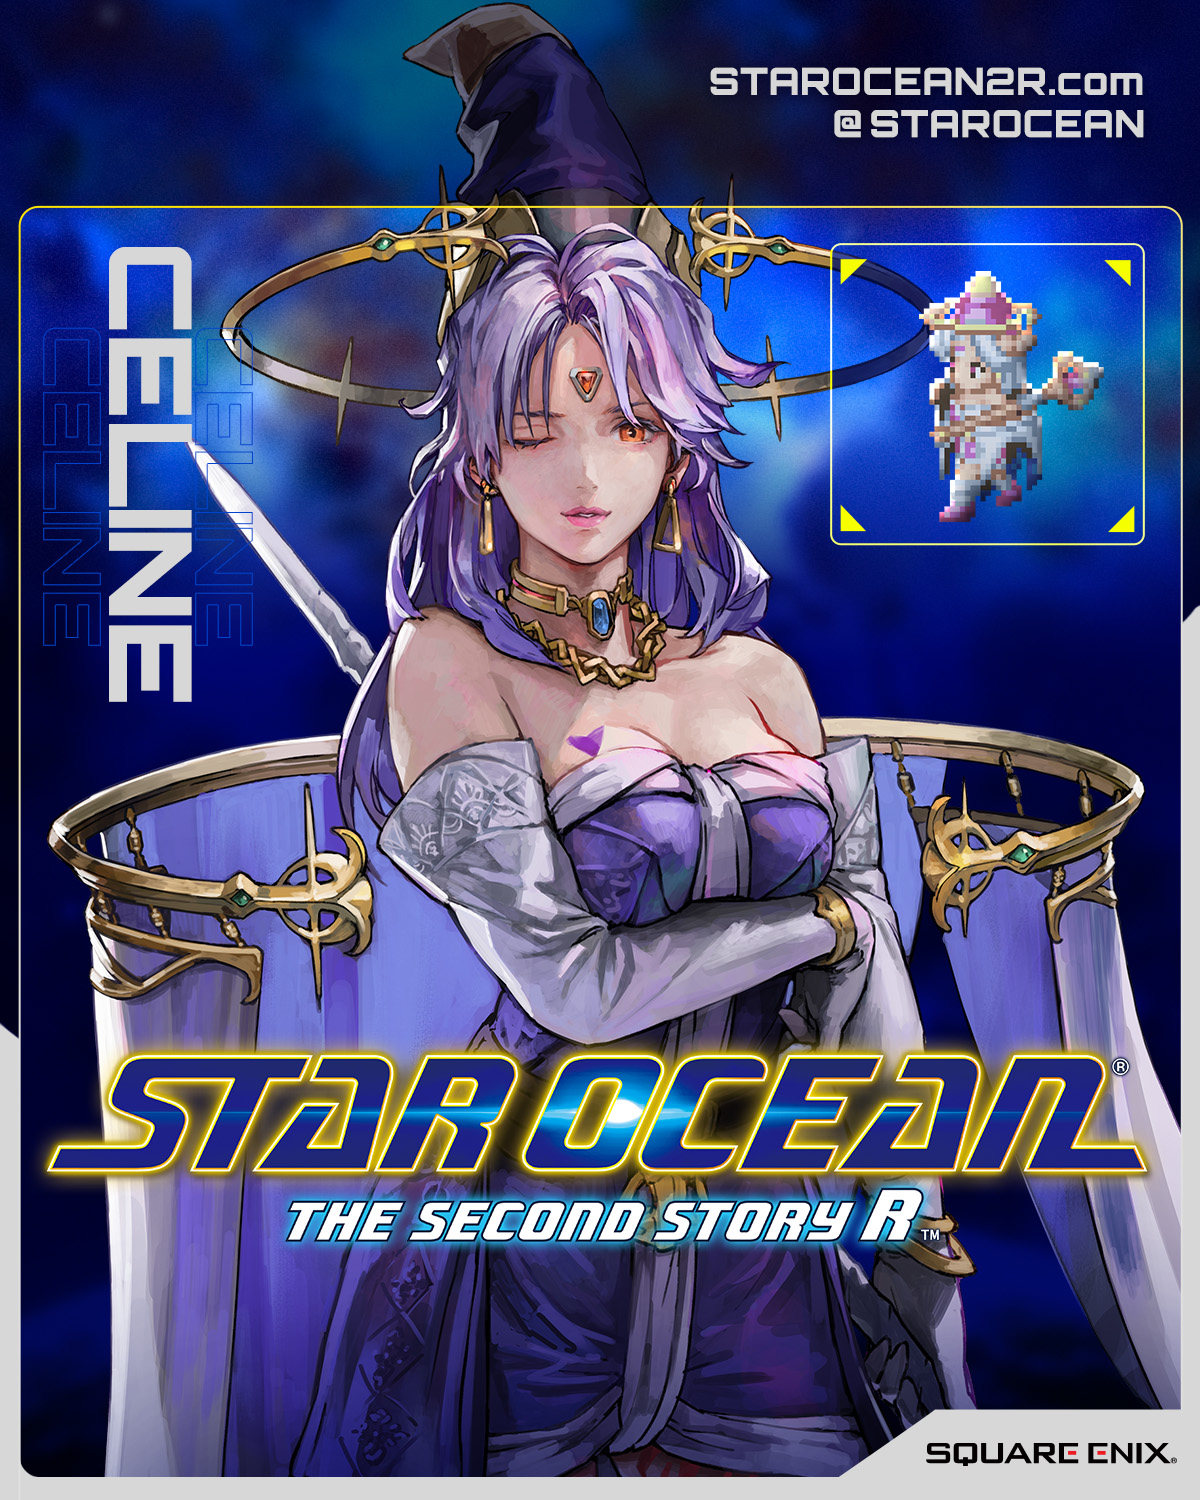 Star Ocean: The Second Story R Ashton, Celine, and Dias Art Shared